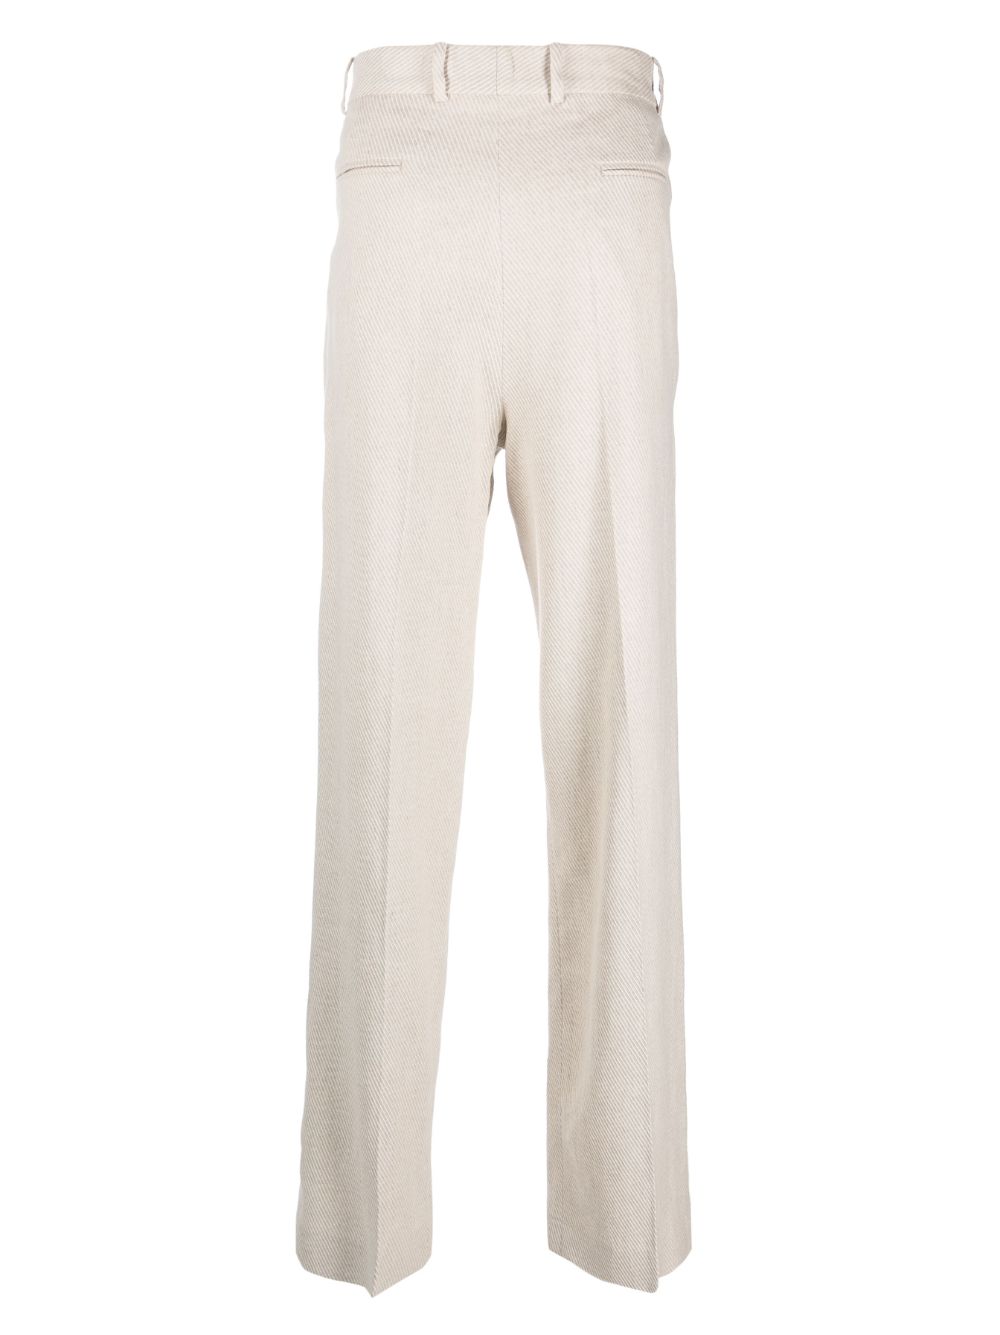 Buy Men Cotton Linen Stone White Trousers Online  Merchant Marine